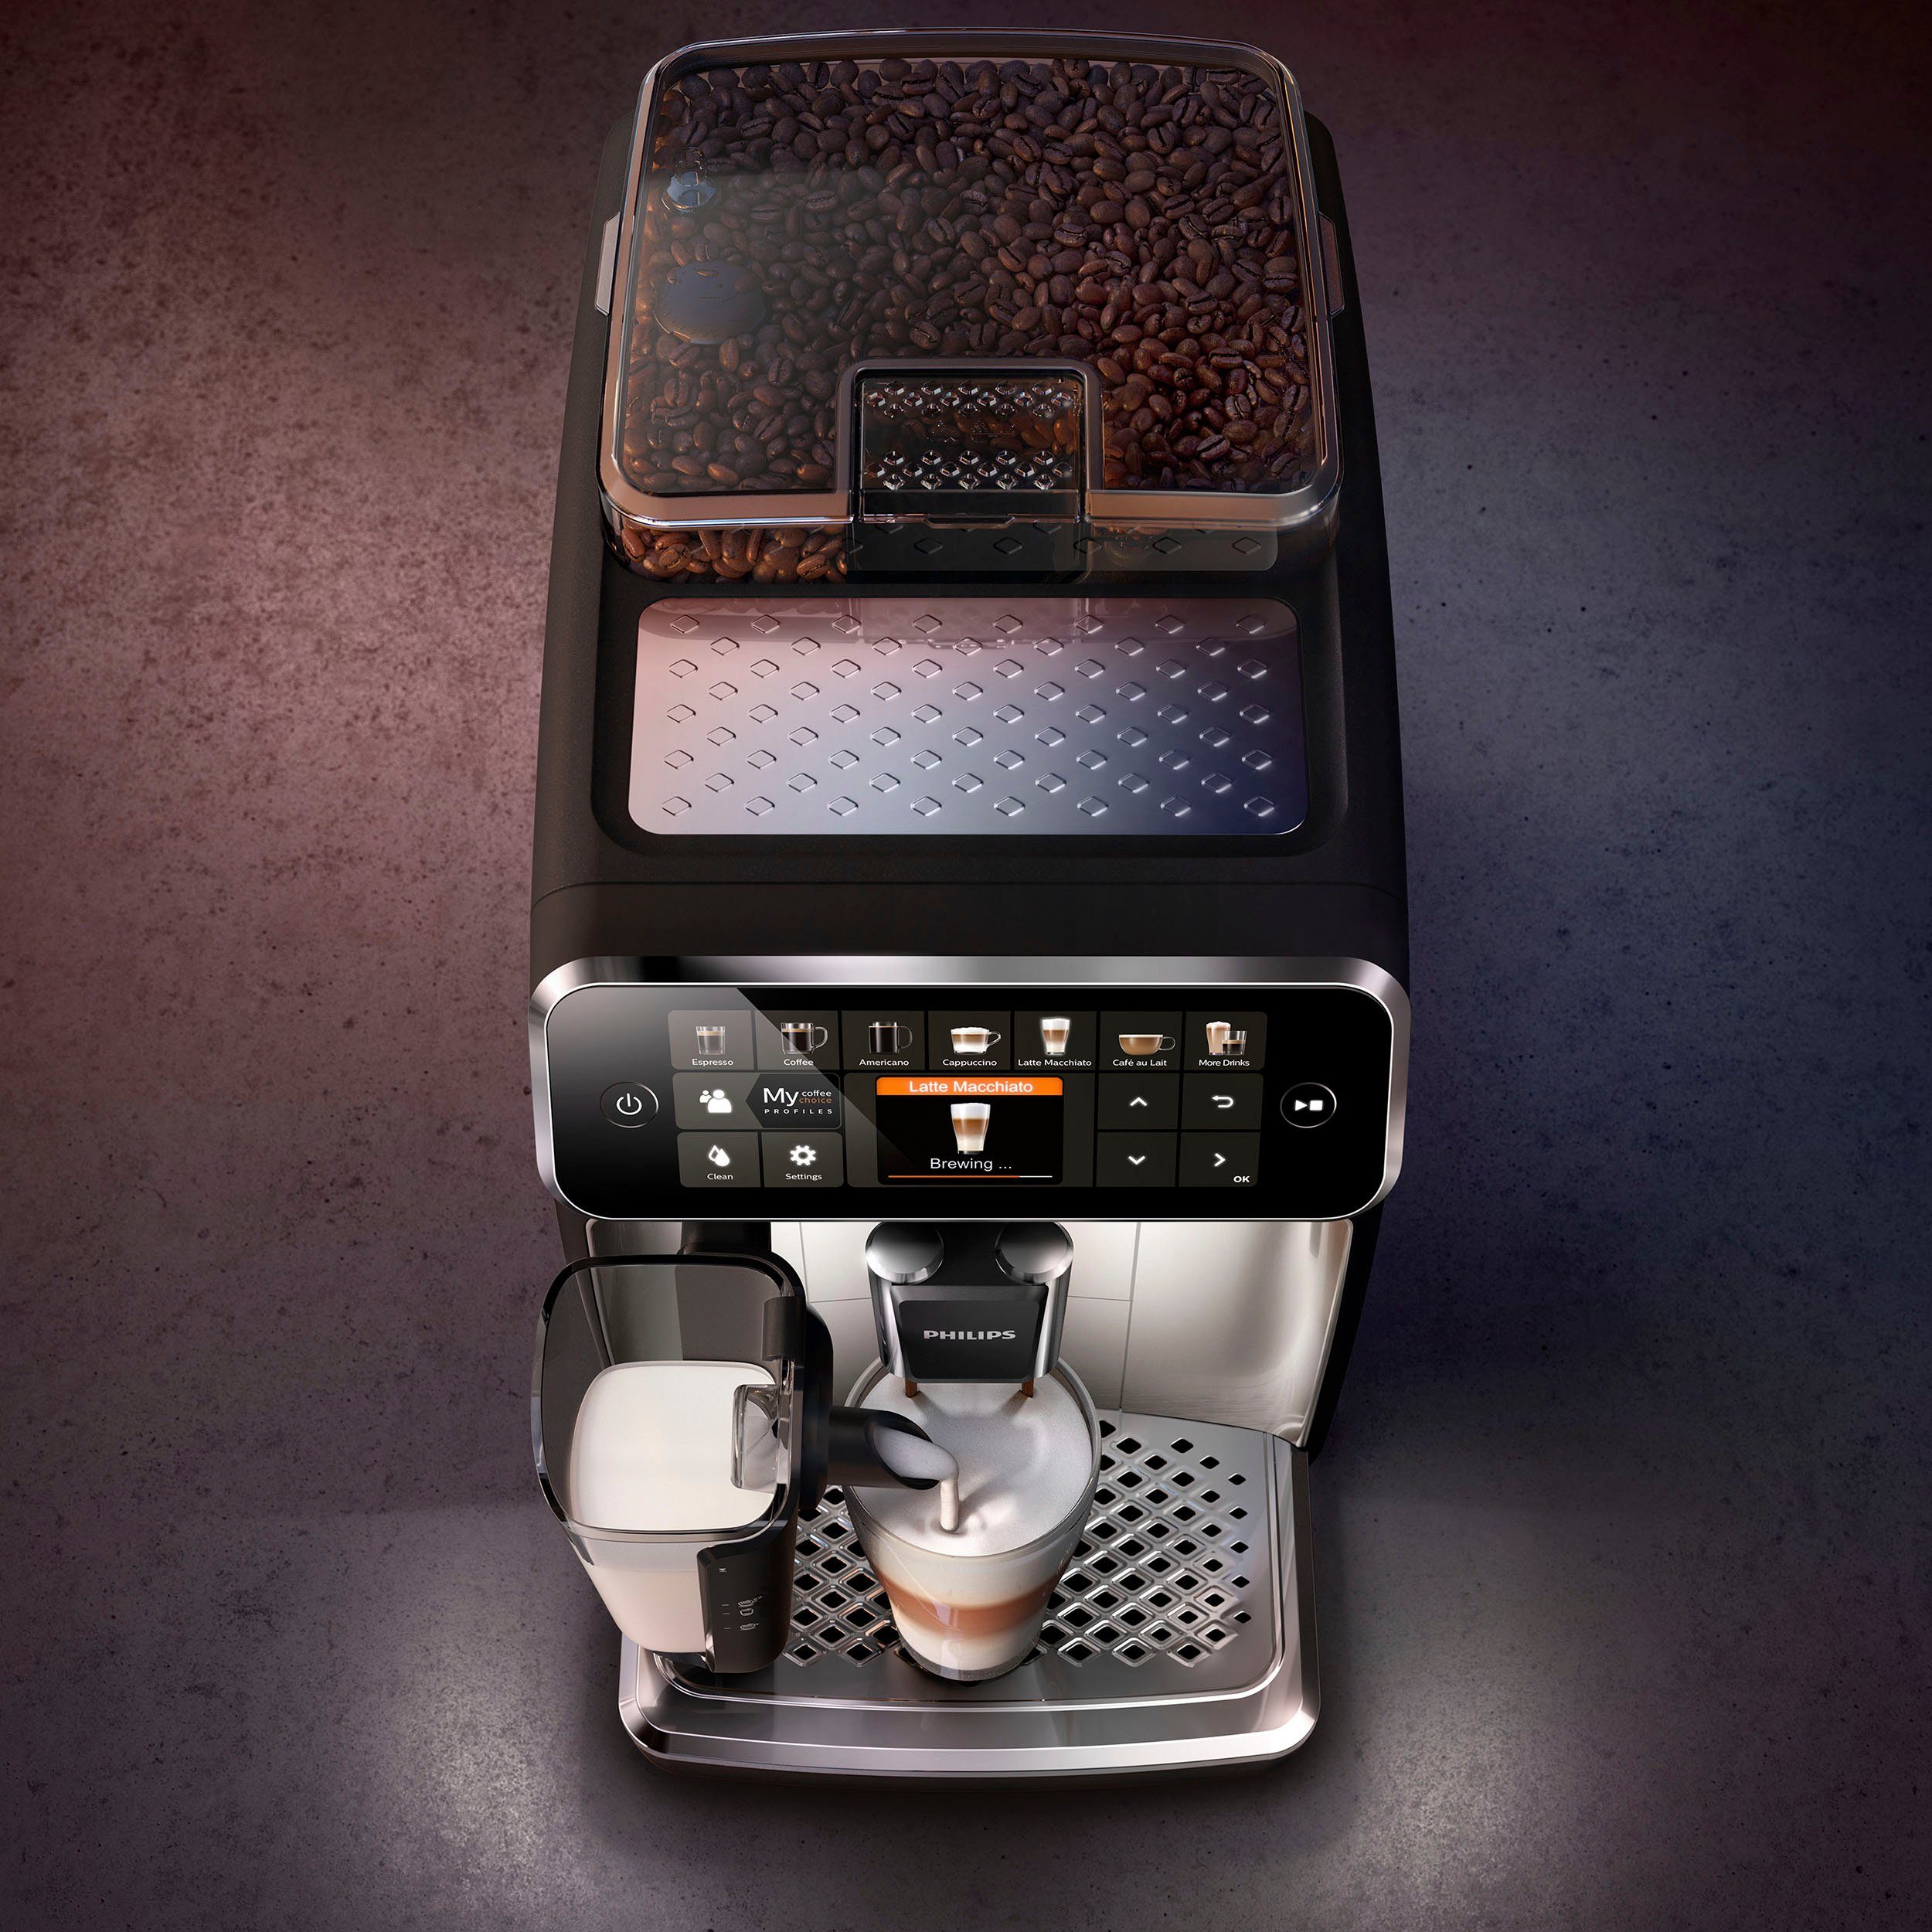 Philips Kaffeevollautomat 5400 Series EP5447/90 LatteGo, chrom/mattschwarz